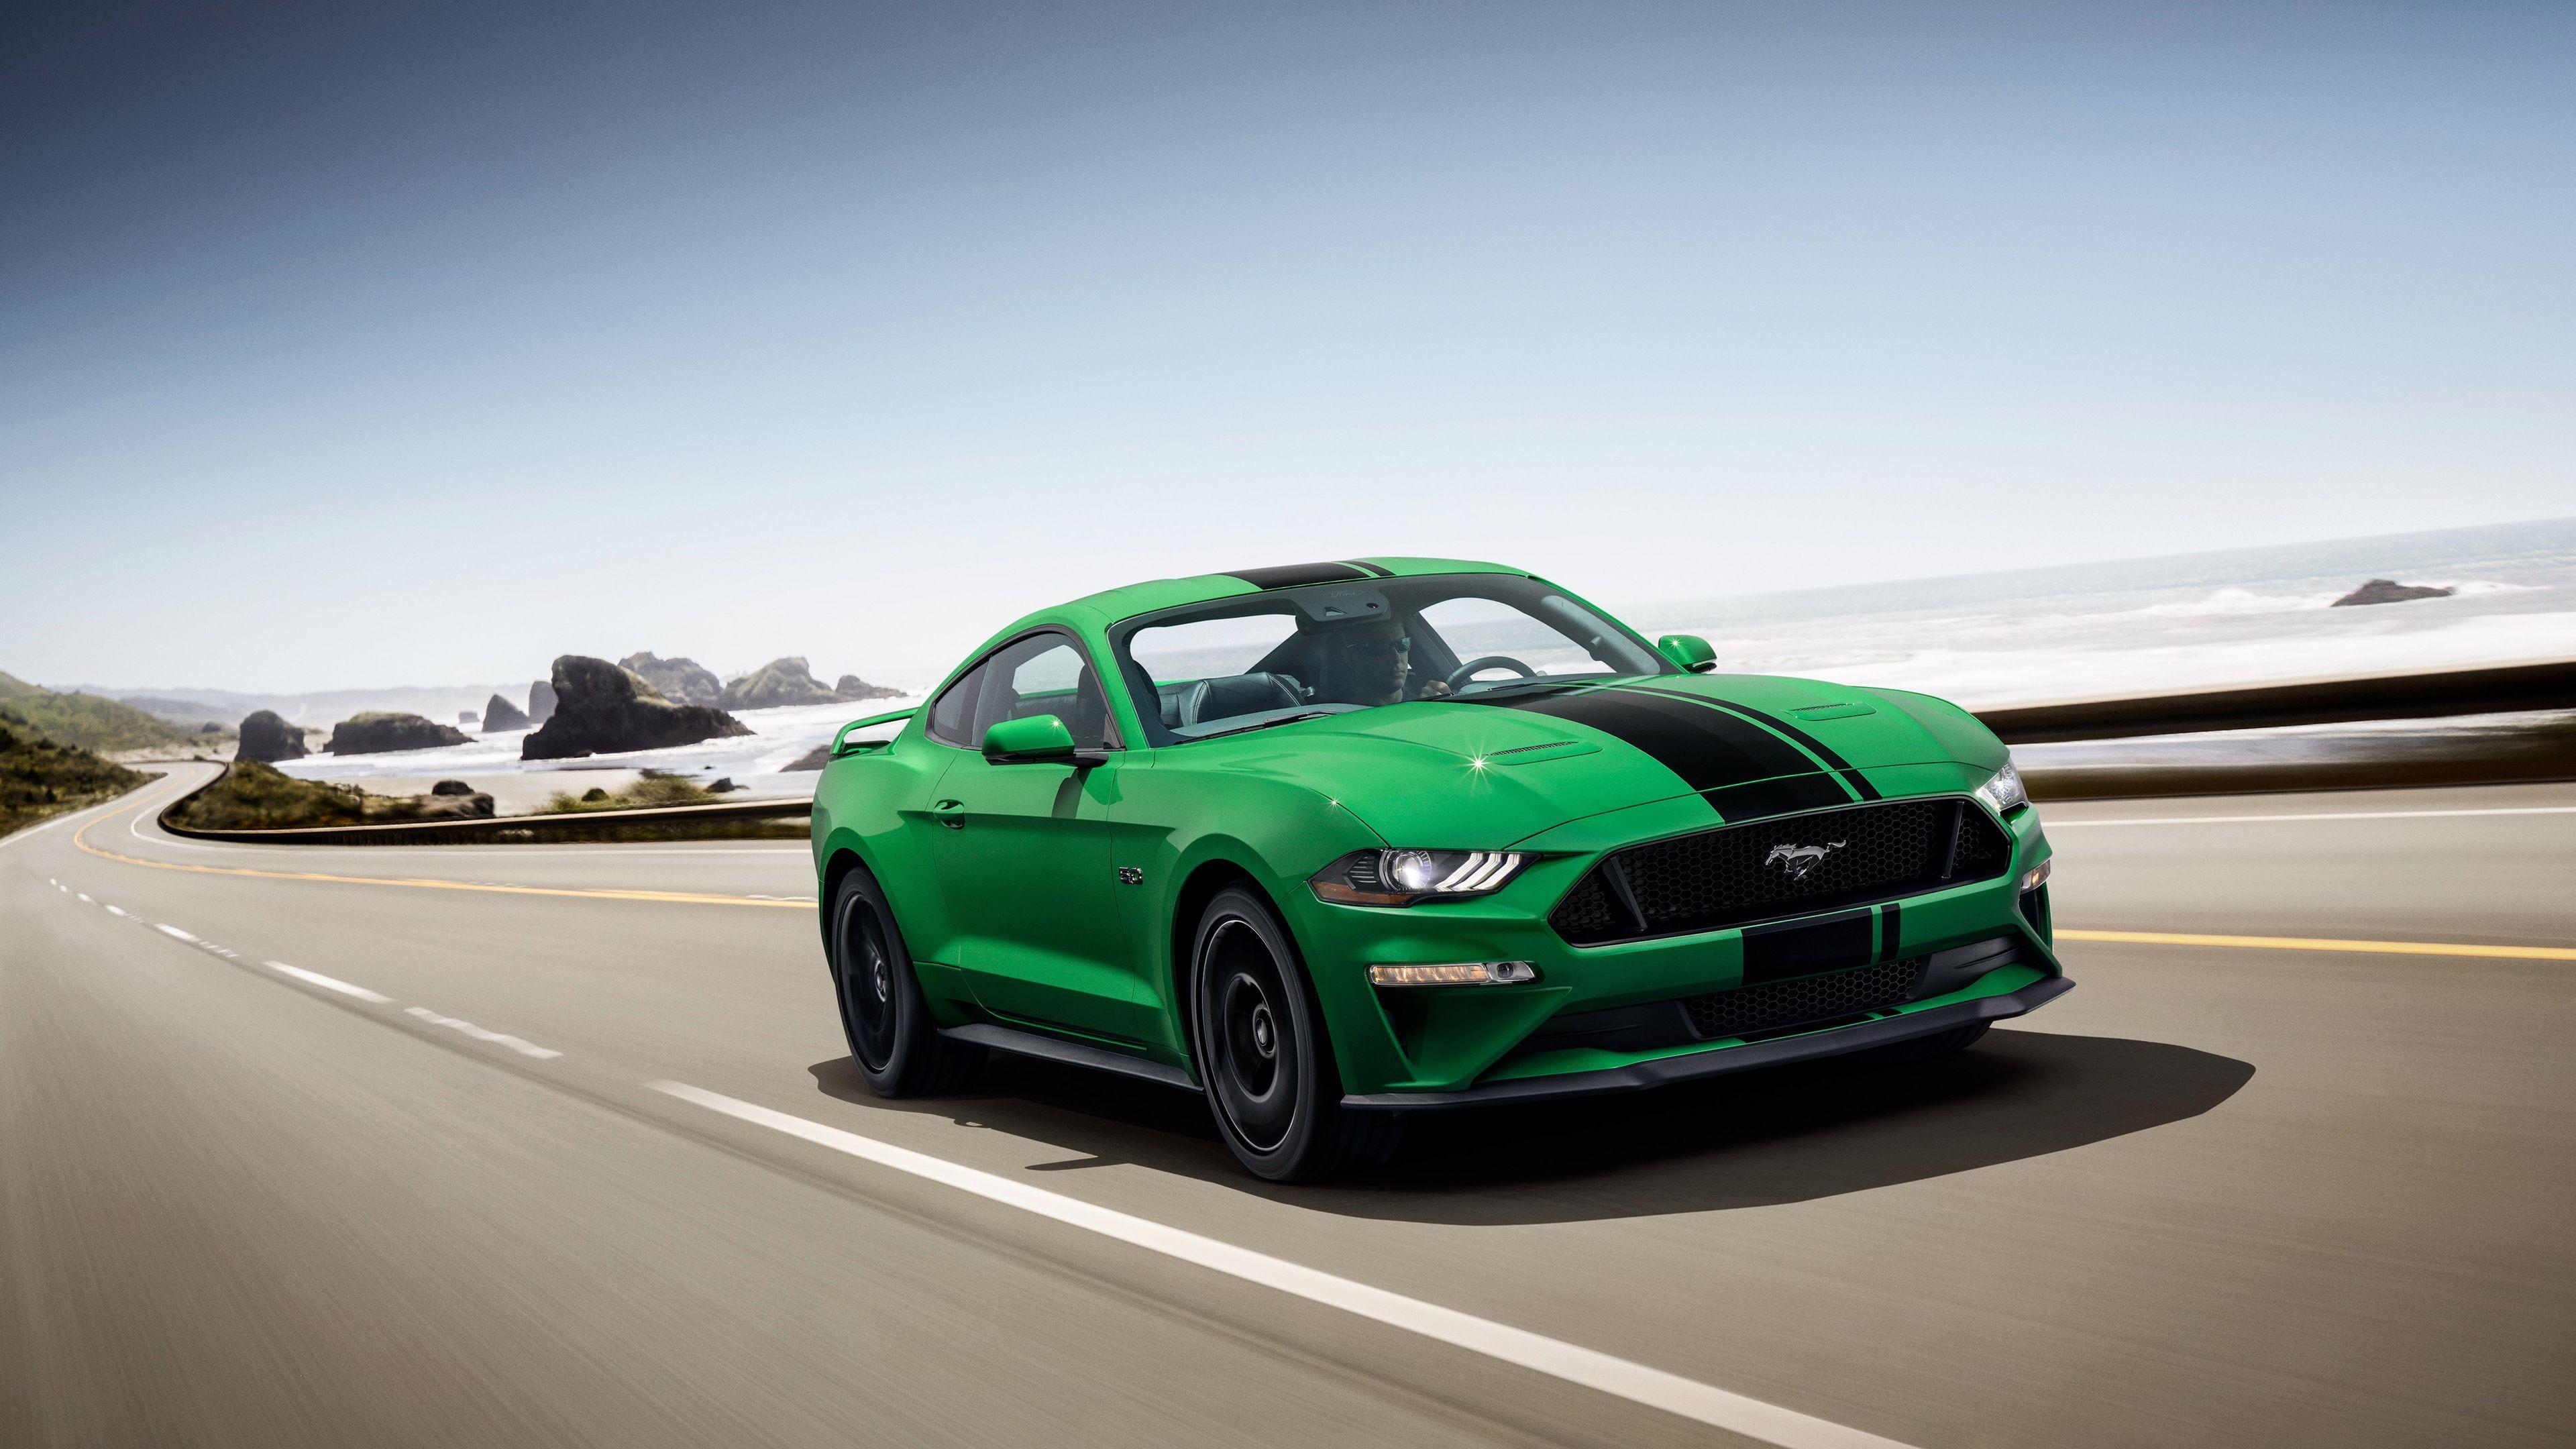 Green Mustang Gt Wallpapers Top Free Green Mustang Gt Backgrounds Wallpaperaccess